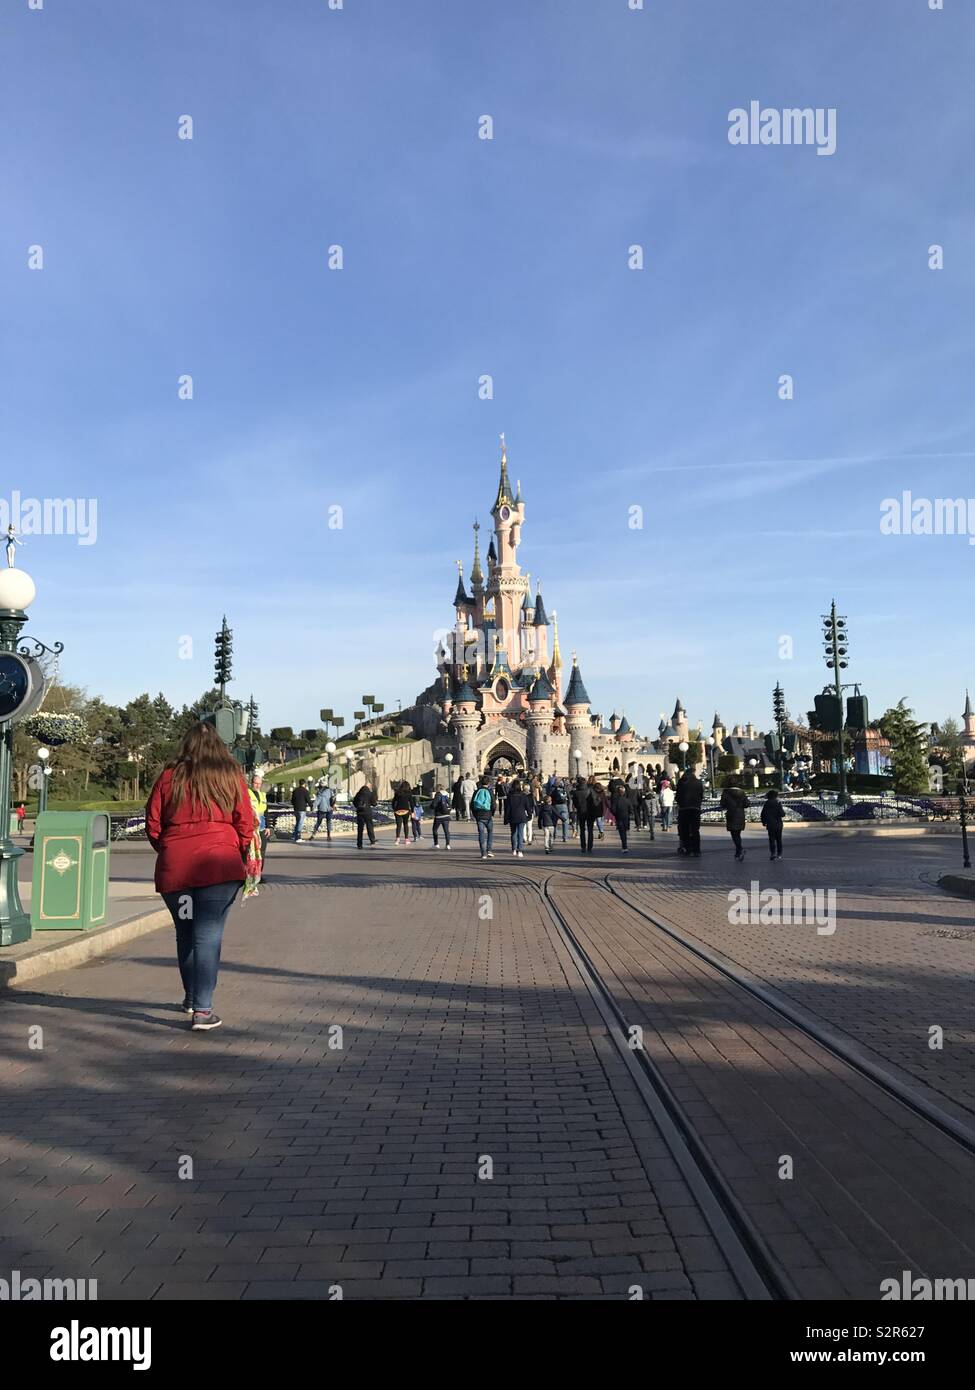 Adult woman wearing red walking to Disneyland Princess Castle in Paris Spring time Stock Photo